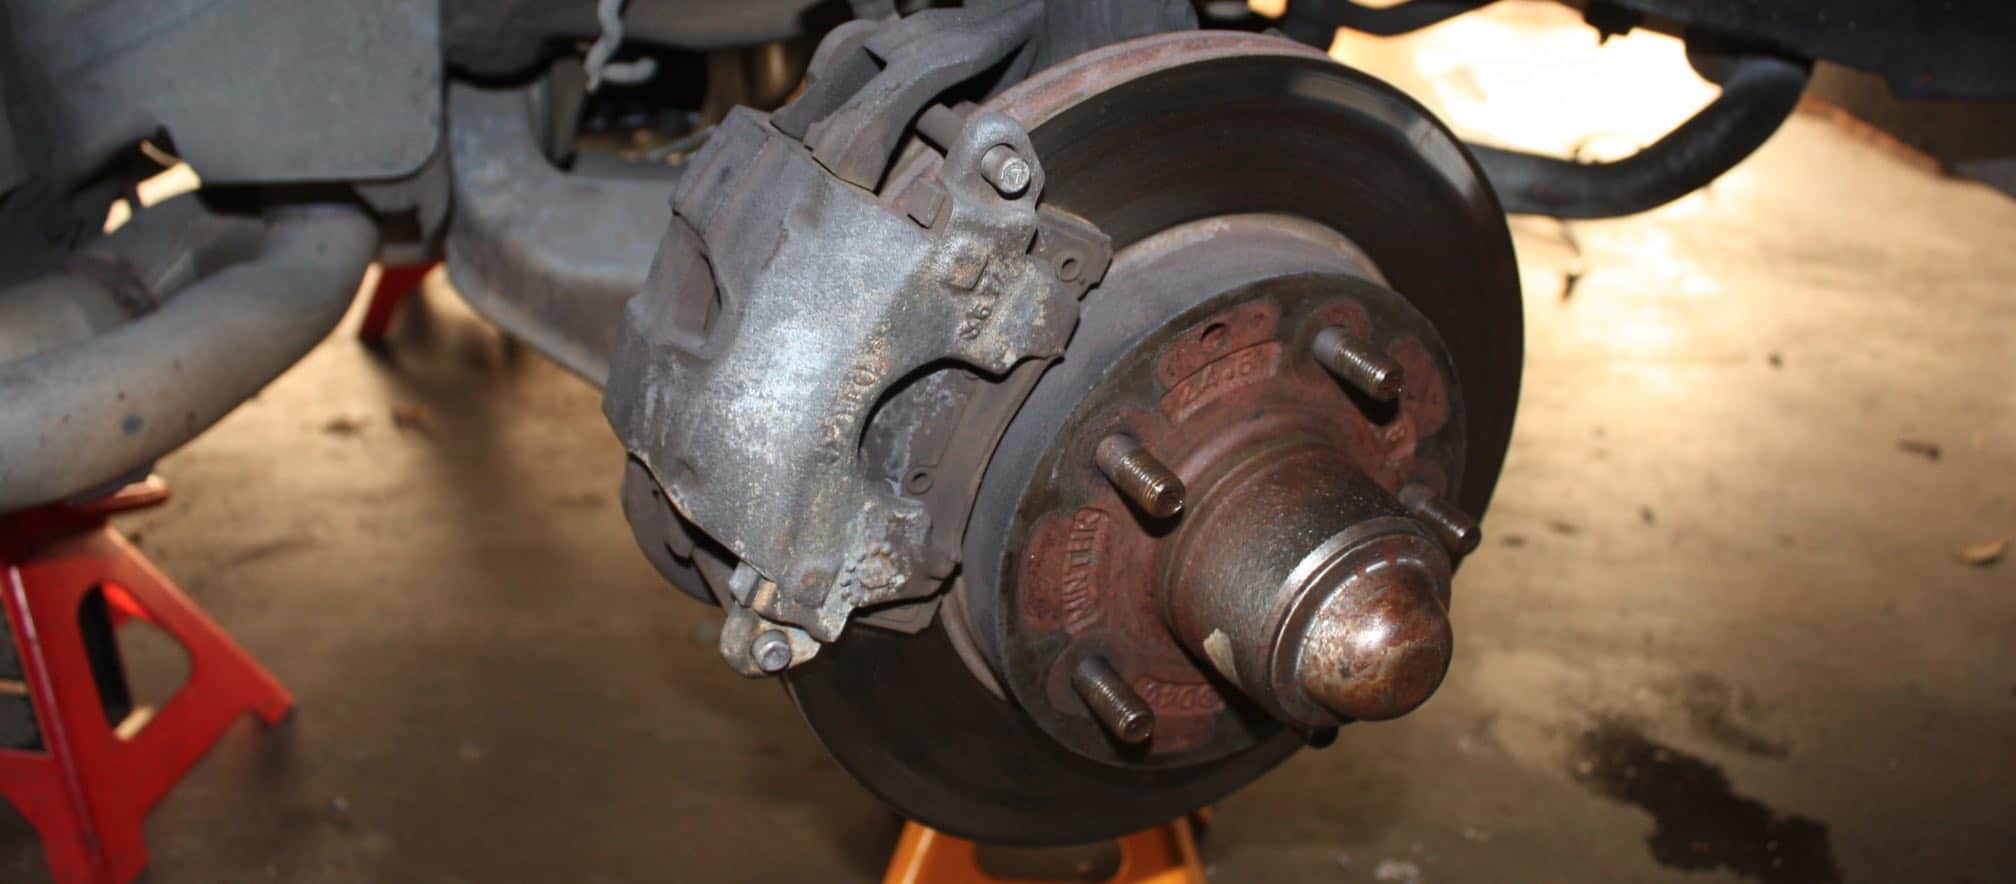 Honda CR-V Warped Rotor Causes